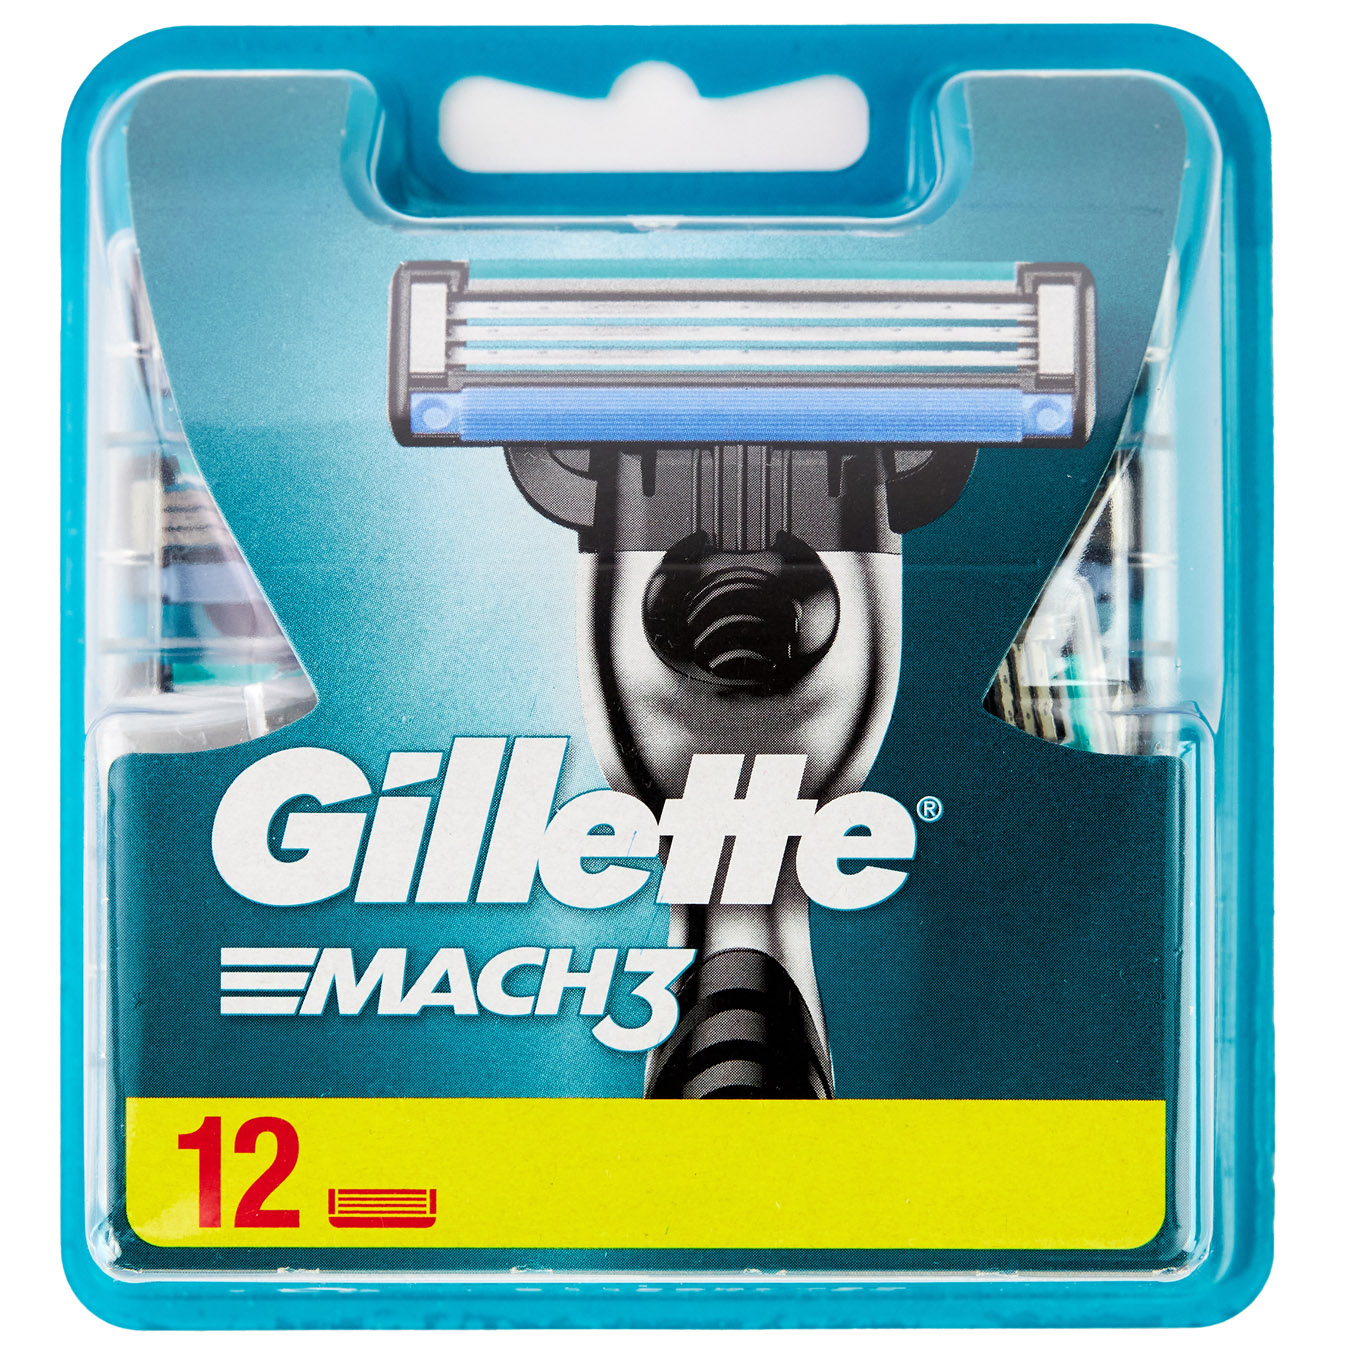 Gillette MACH3 Cartridge for shaving 12 pcs